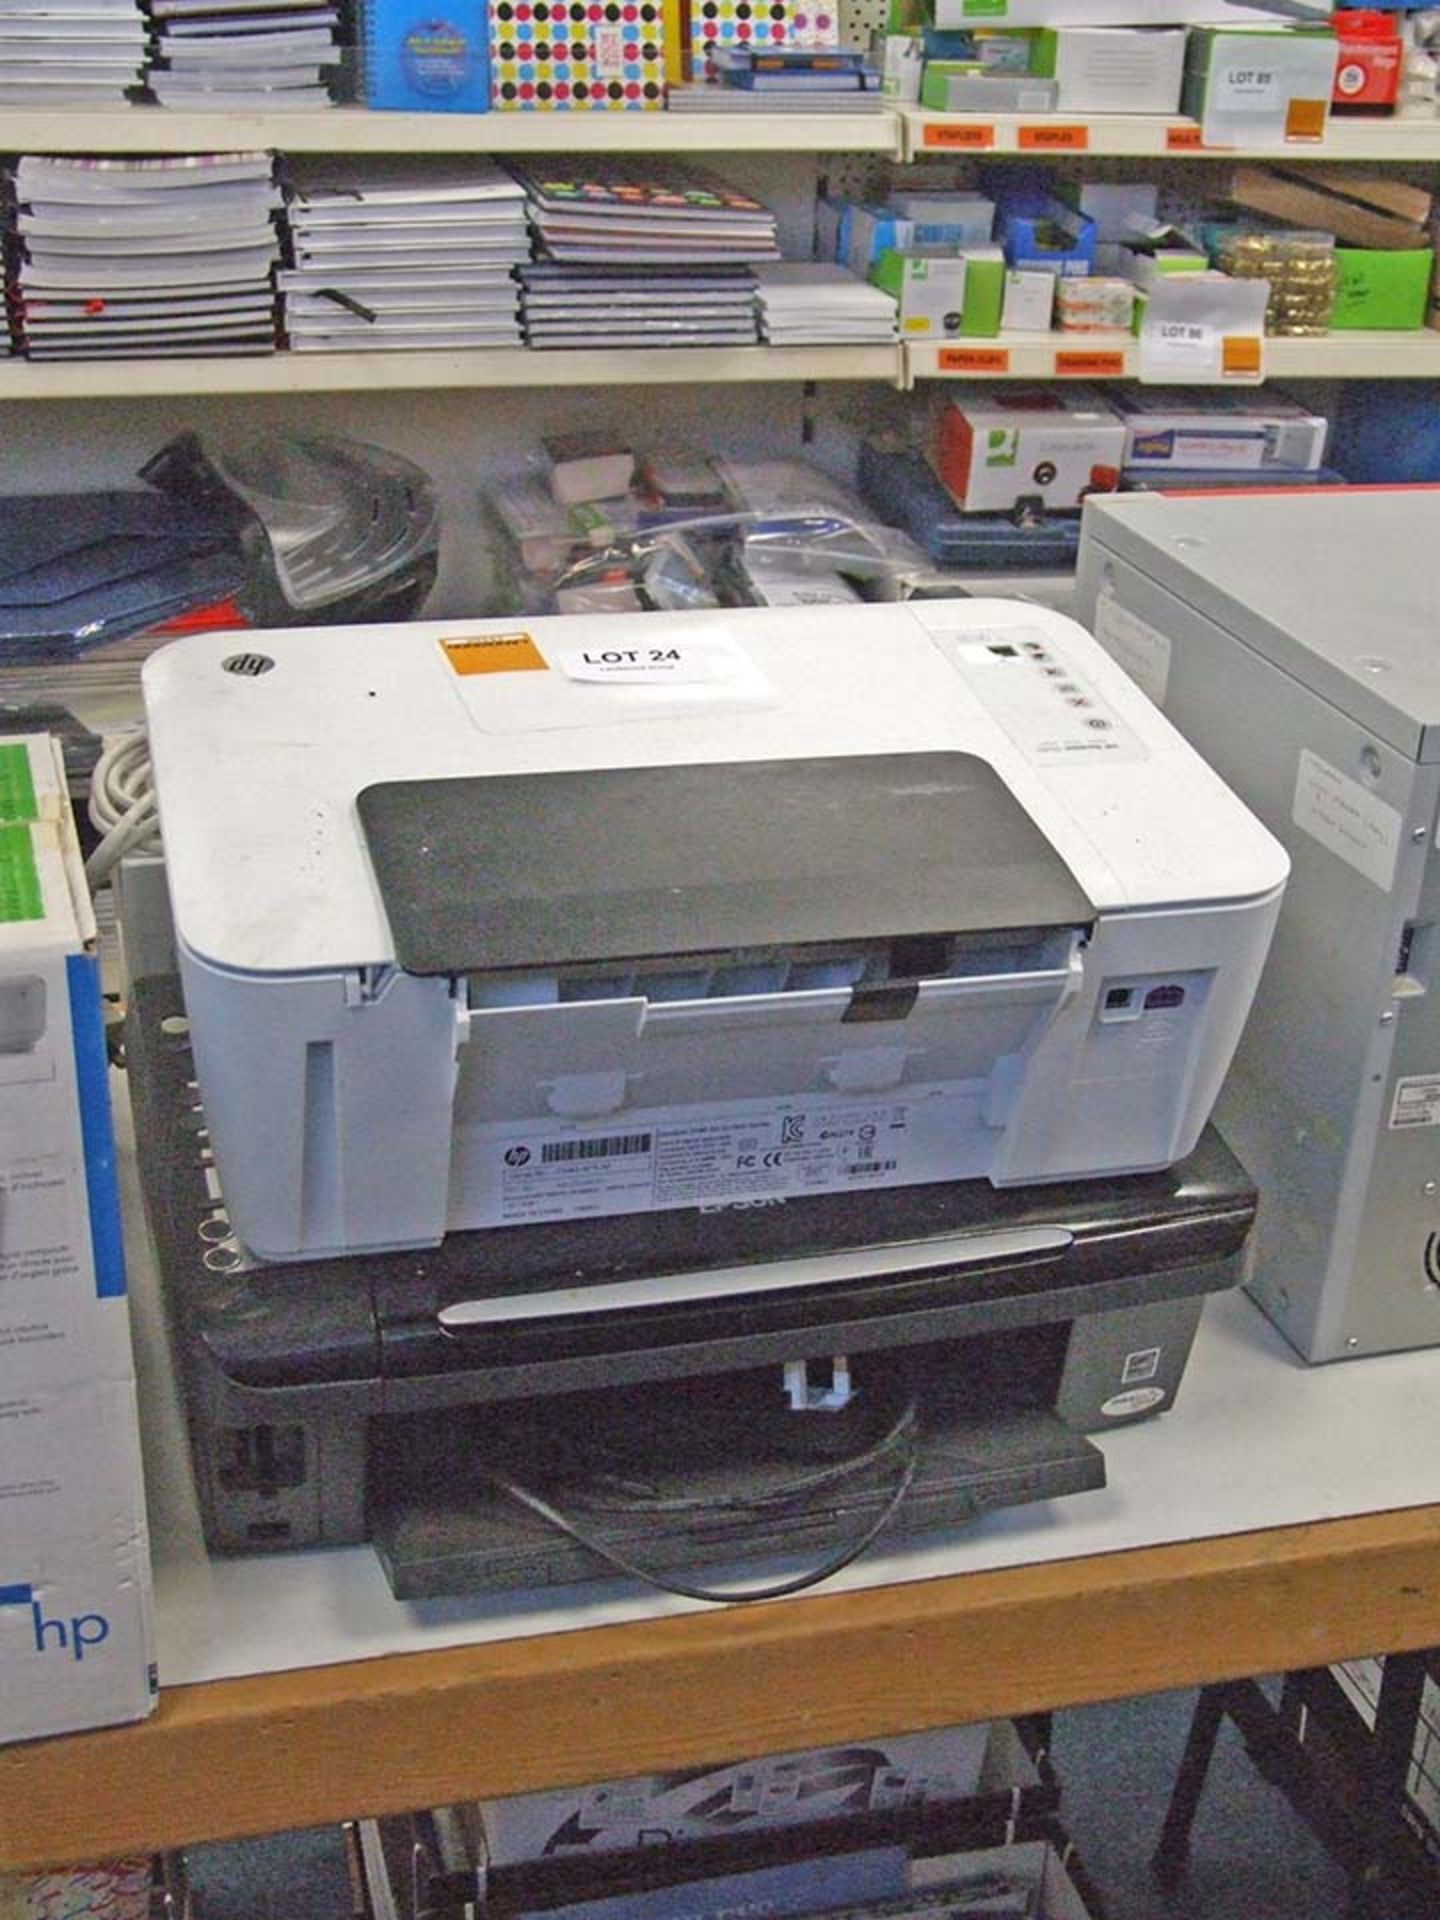 2 Inkjet printers EPSON stylus SX200 and HP Deskjet 2540